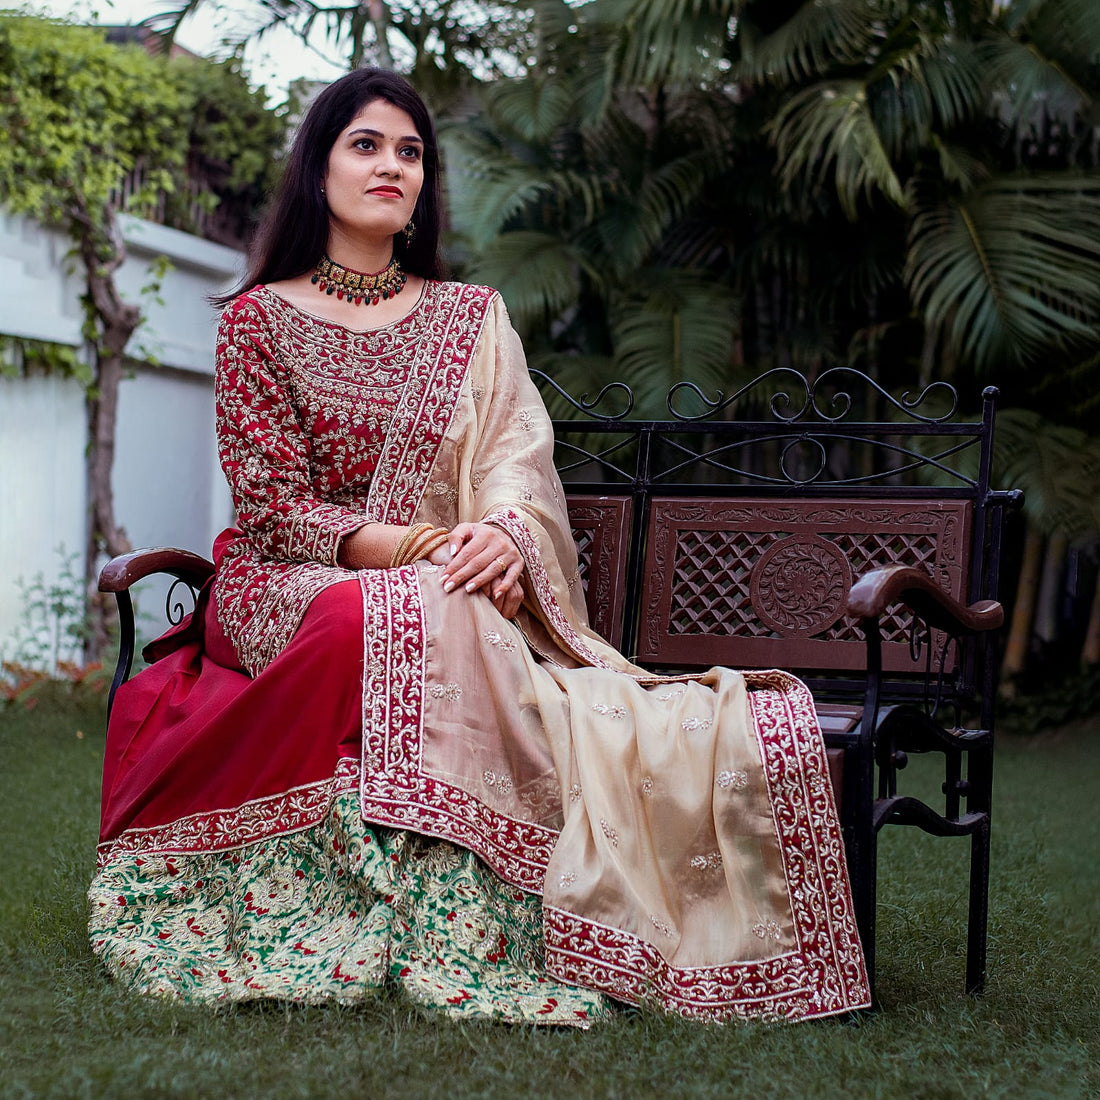 Women wearing hand-embroidered farshi ghararas